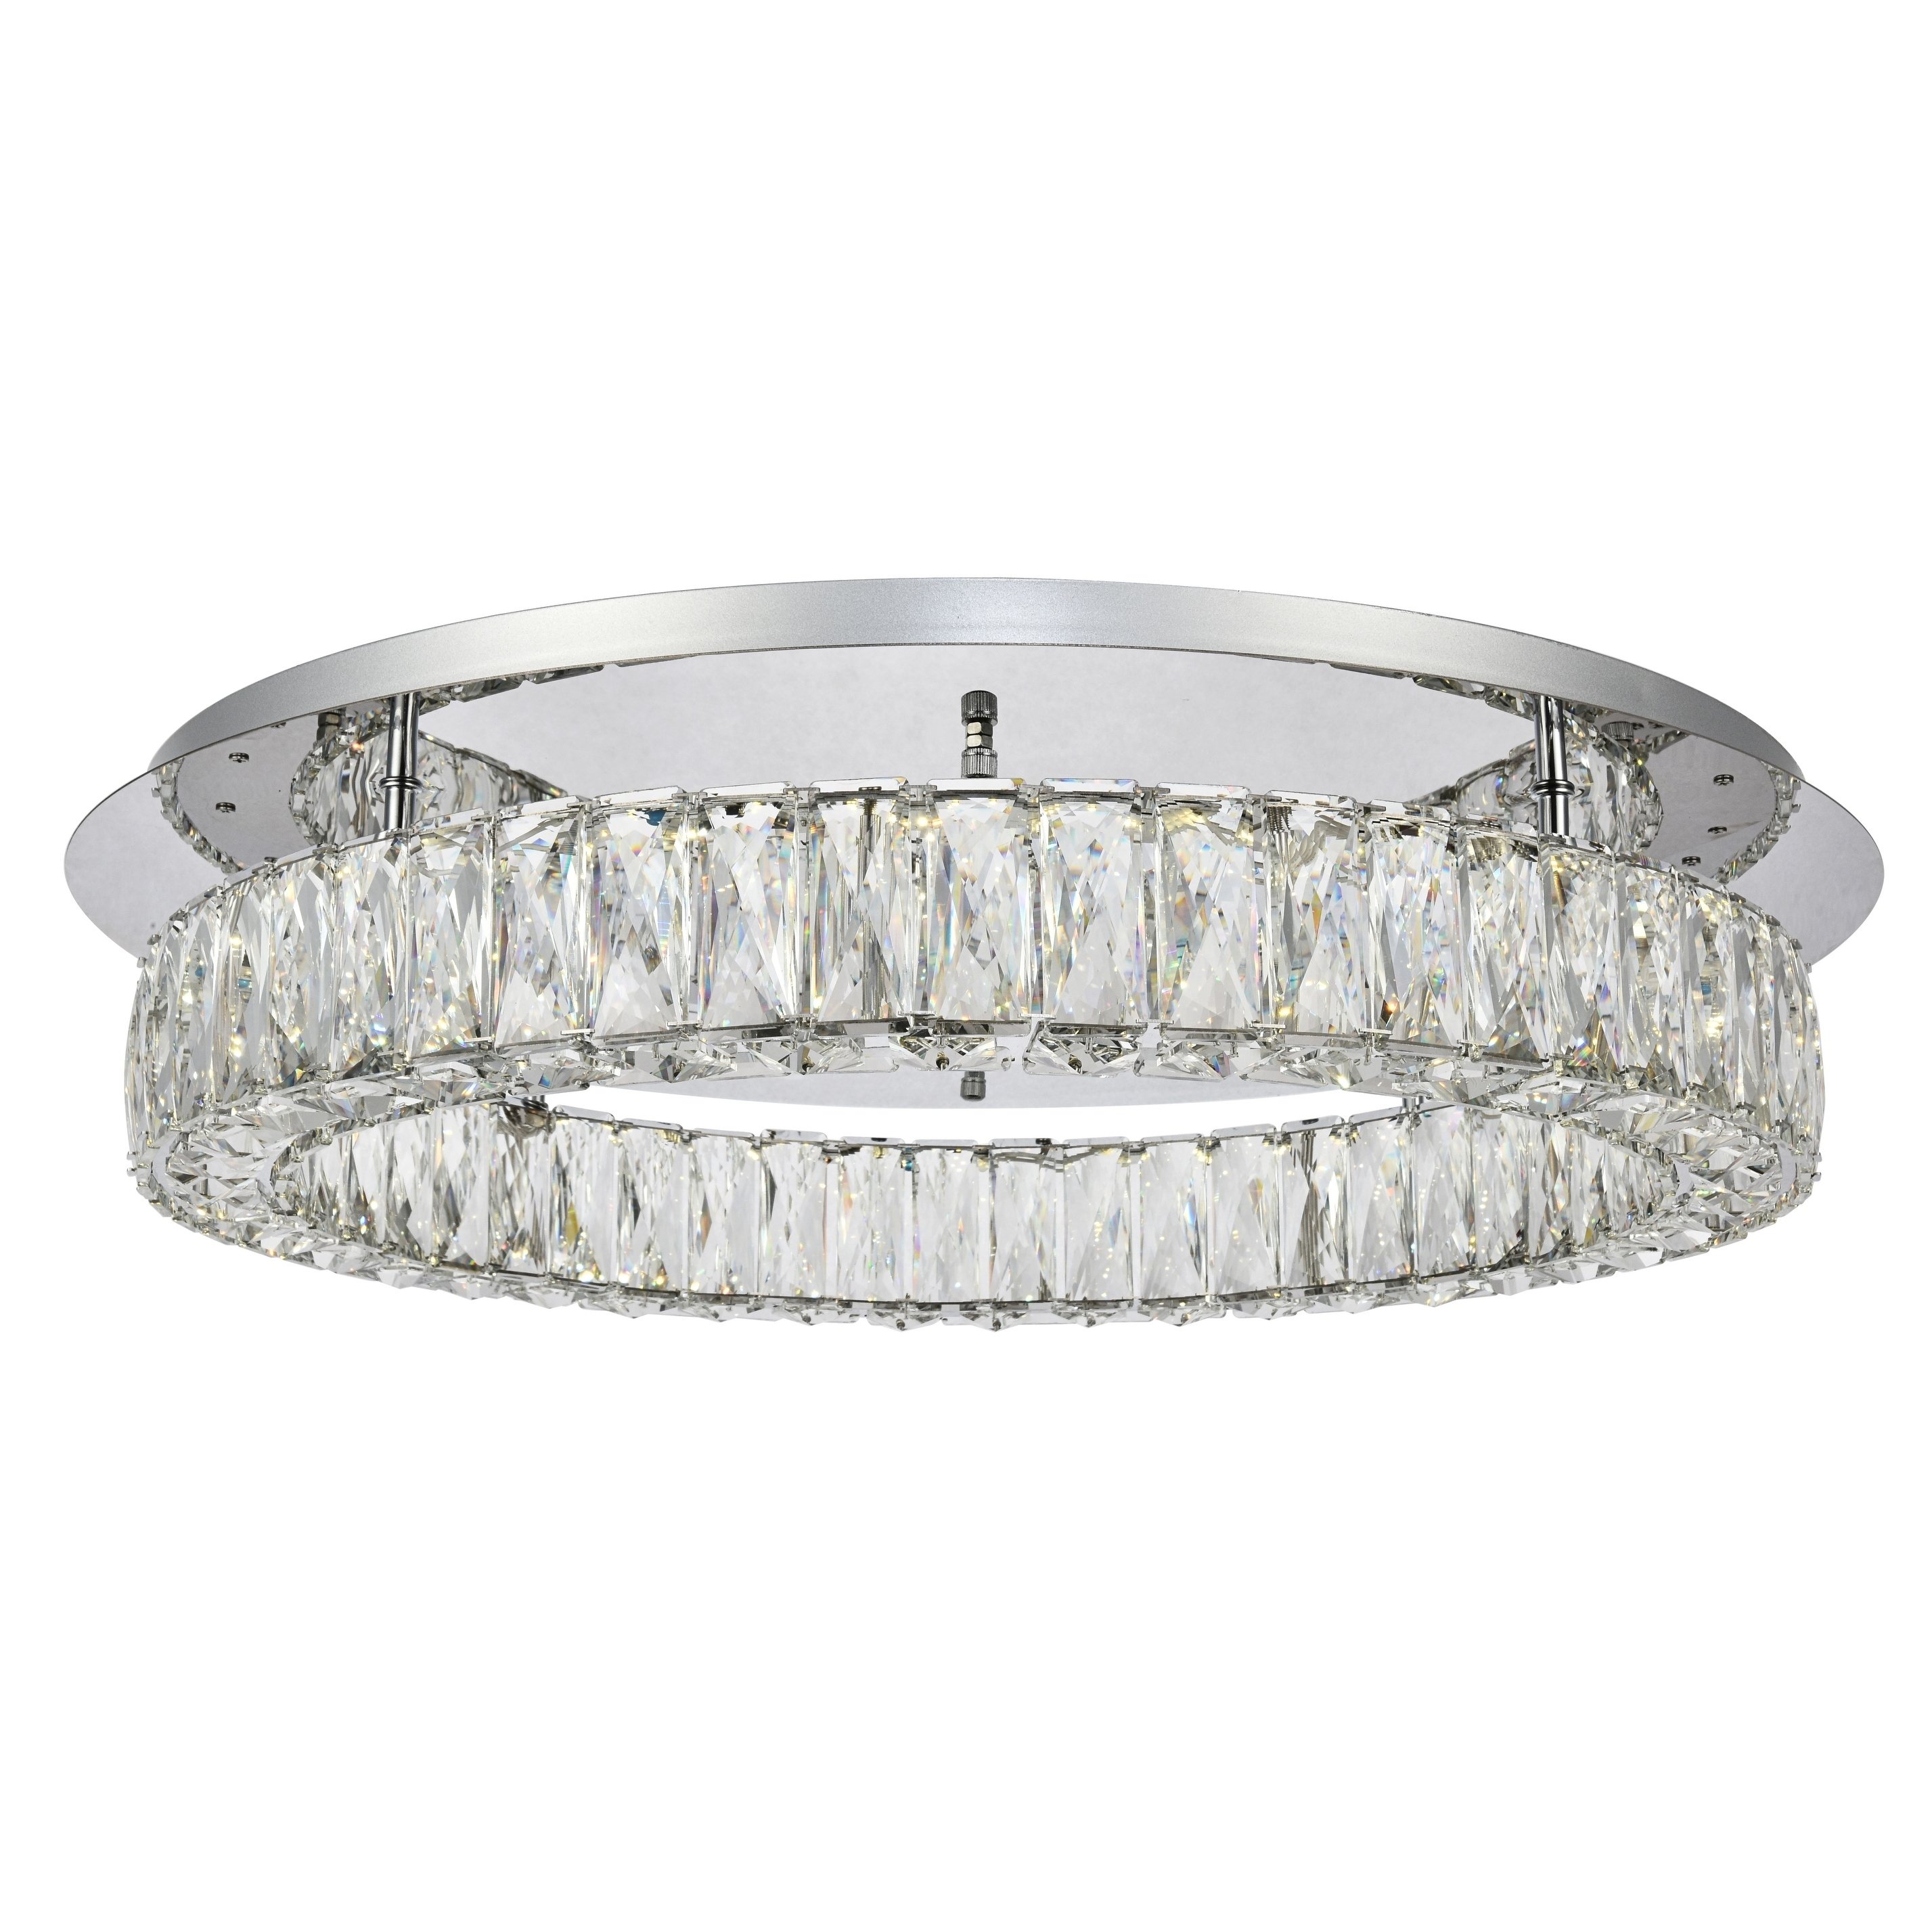 Dhererka 65cm Hal-Ring Monroe LED Crystal Flush Mount